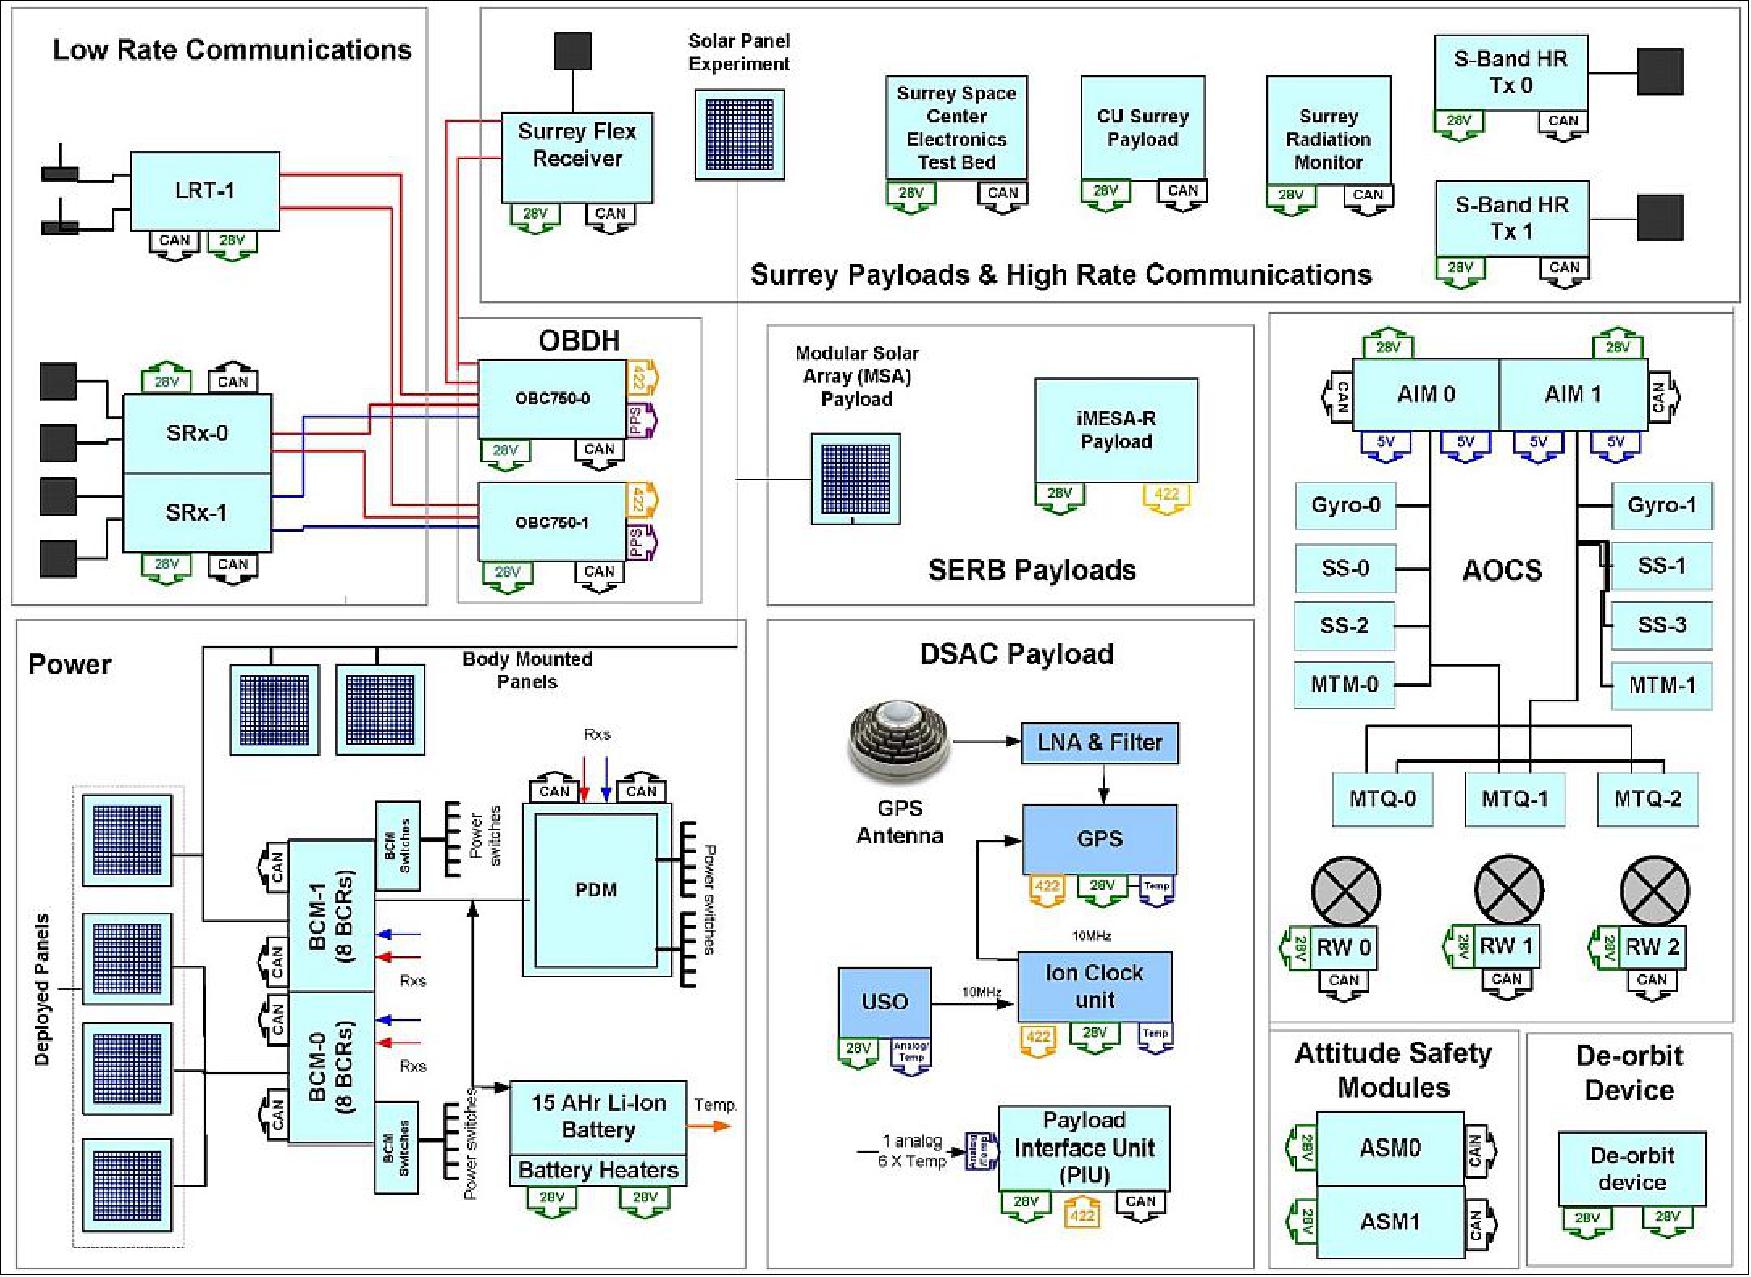 Figure 4: OTB architecture based on 150 platform (image credit: SST-US, Ref. 7)